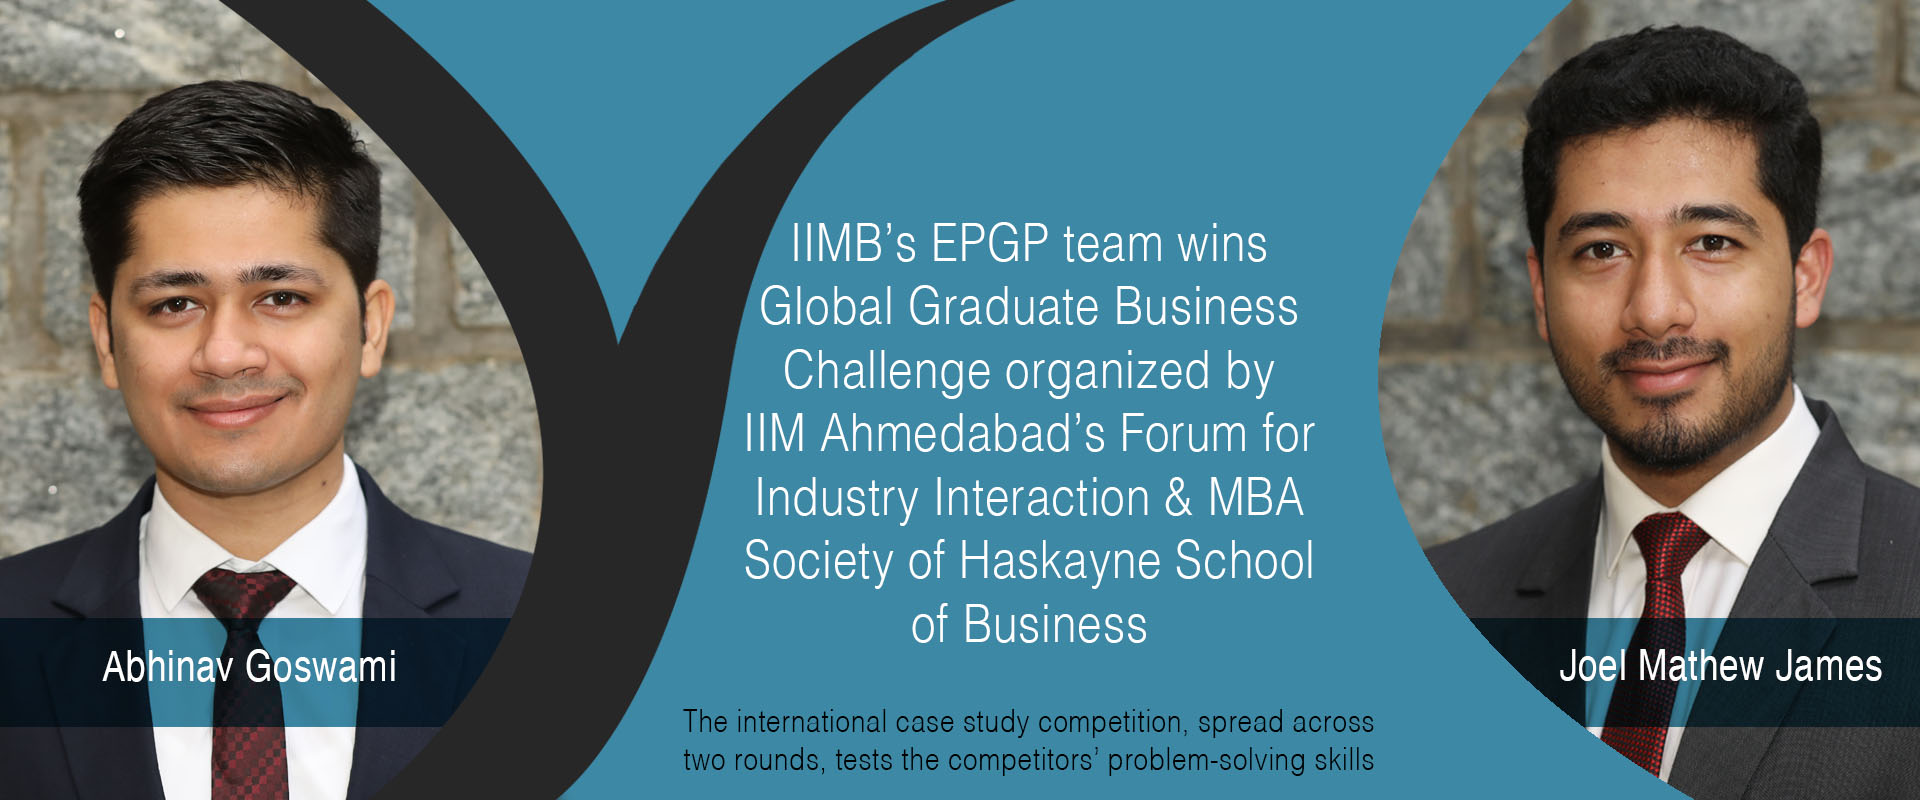 IIMB’s EPGP team wins Global Graduate Business Challenge organized by IIM Ahmedabad’s Forum for Industry Interaction & MBA Society of Haskayne School of Business